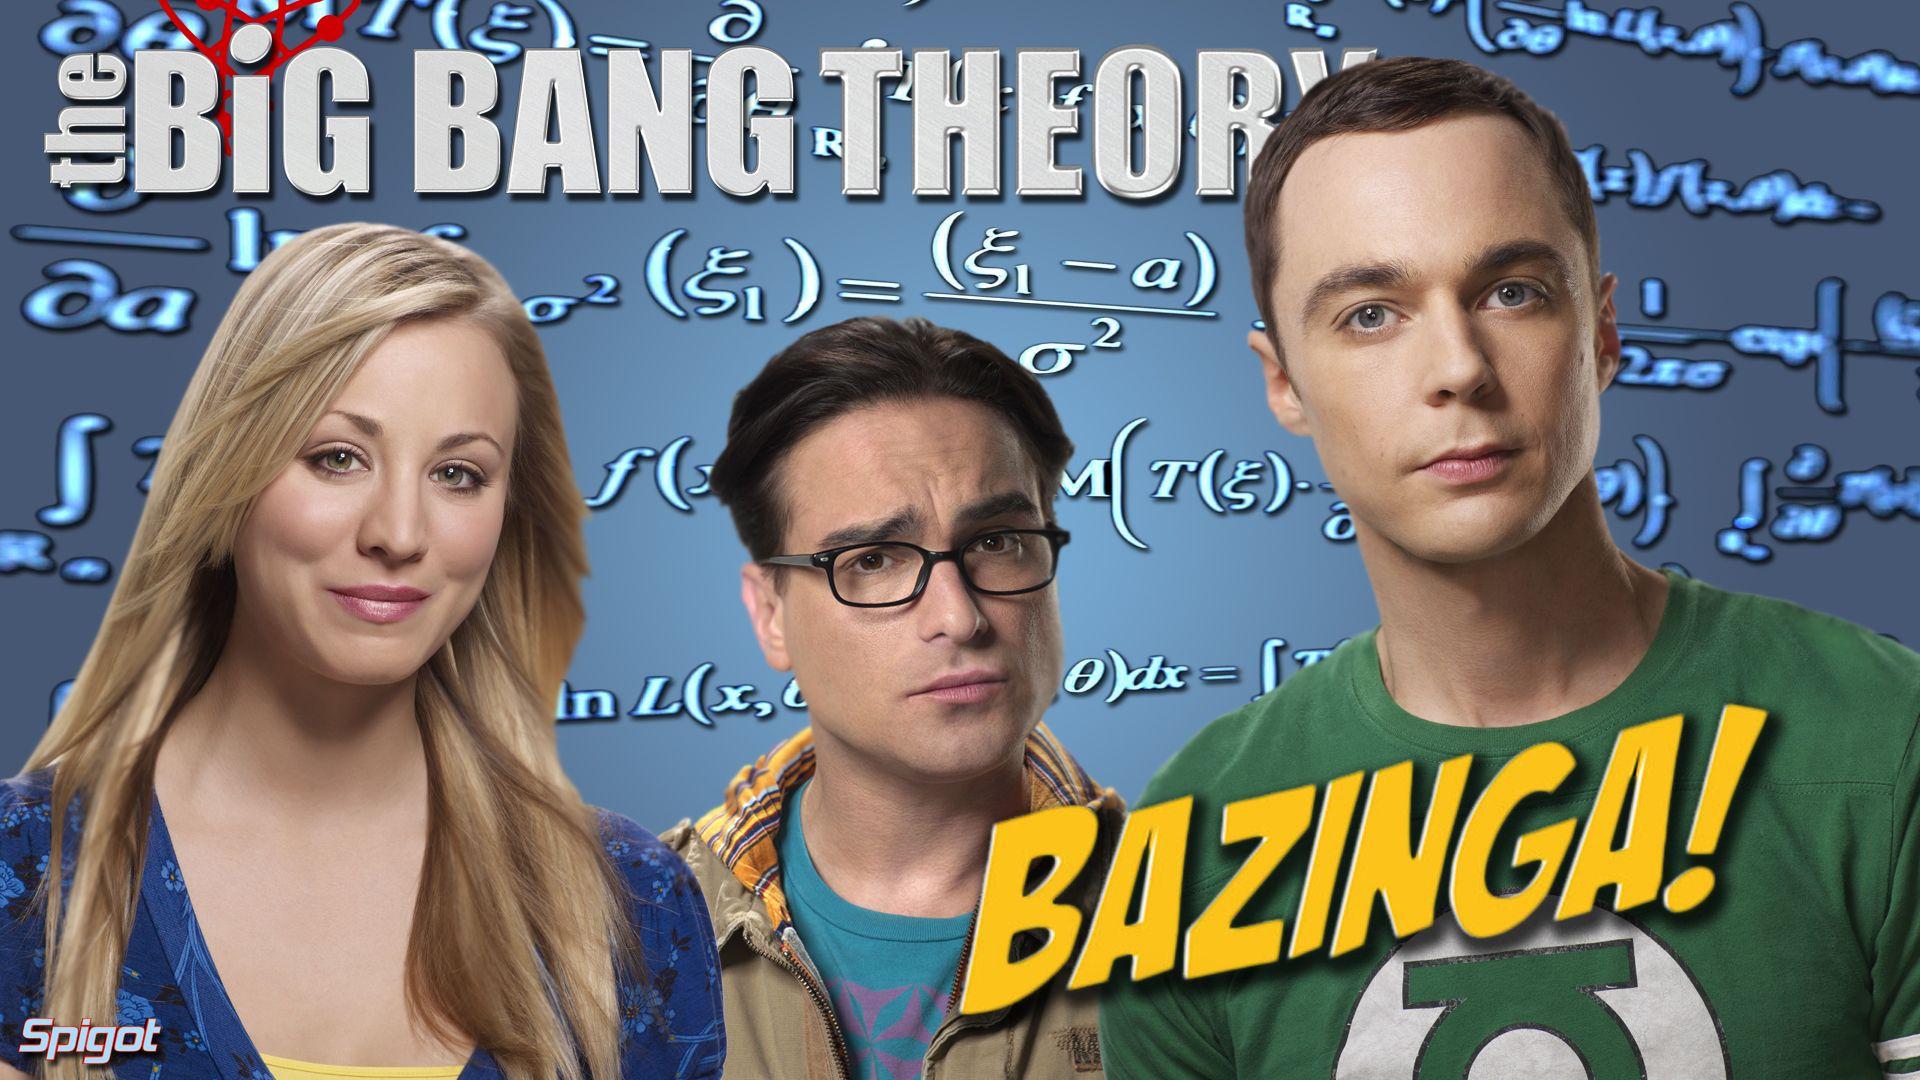 The Big Bang Theory Wallpaper. George Spigot's Blog